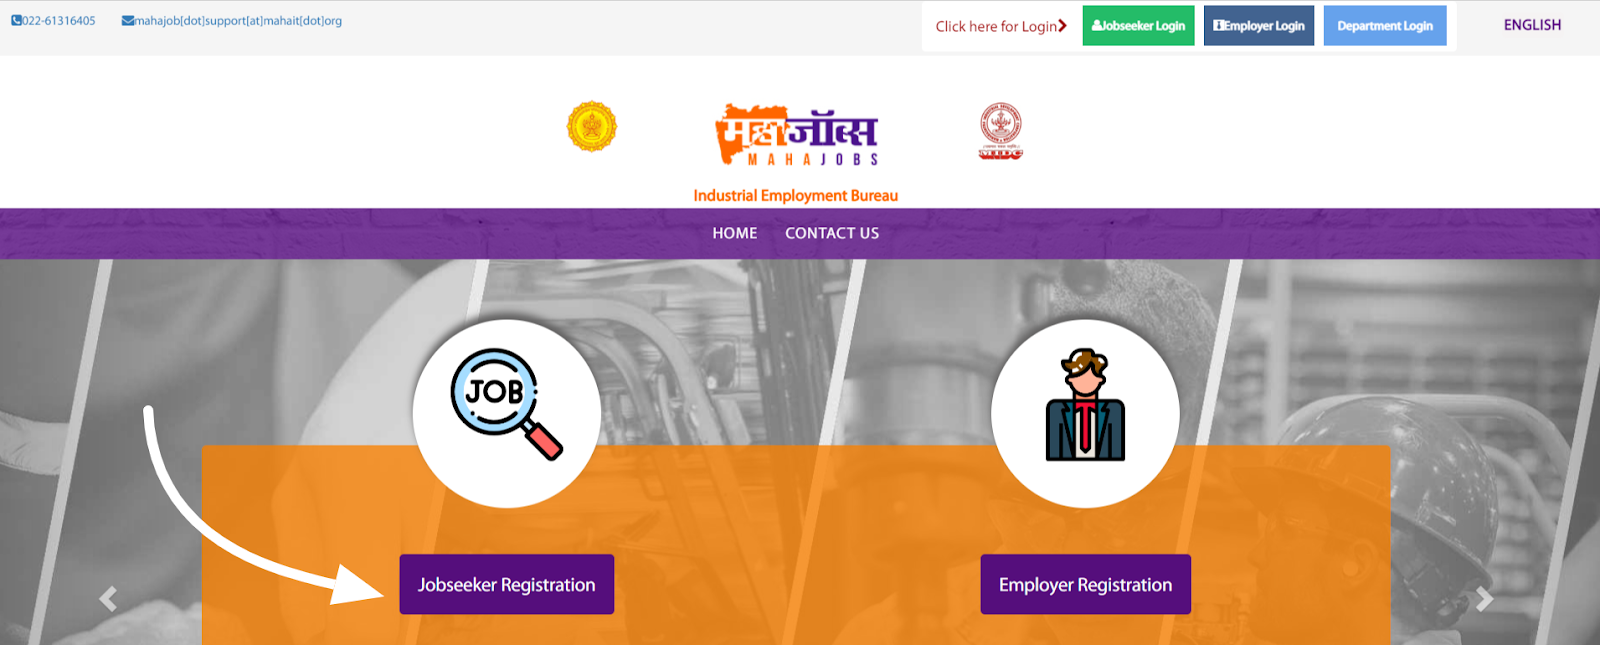 Mahajob Portal Jobseeker Registration